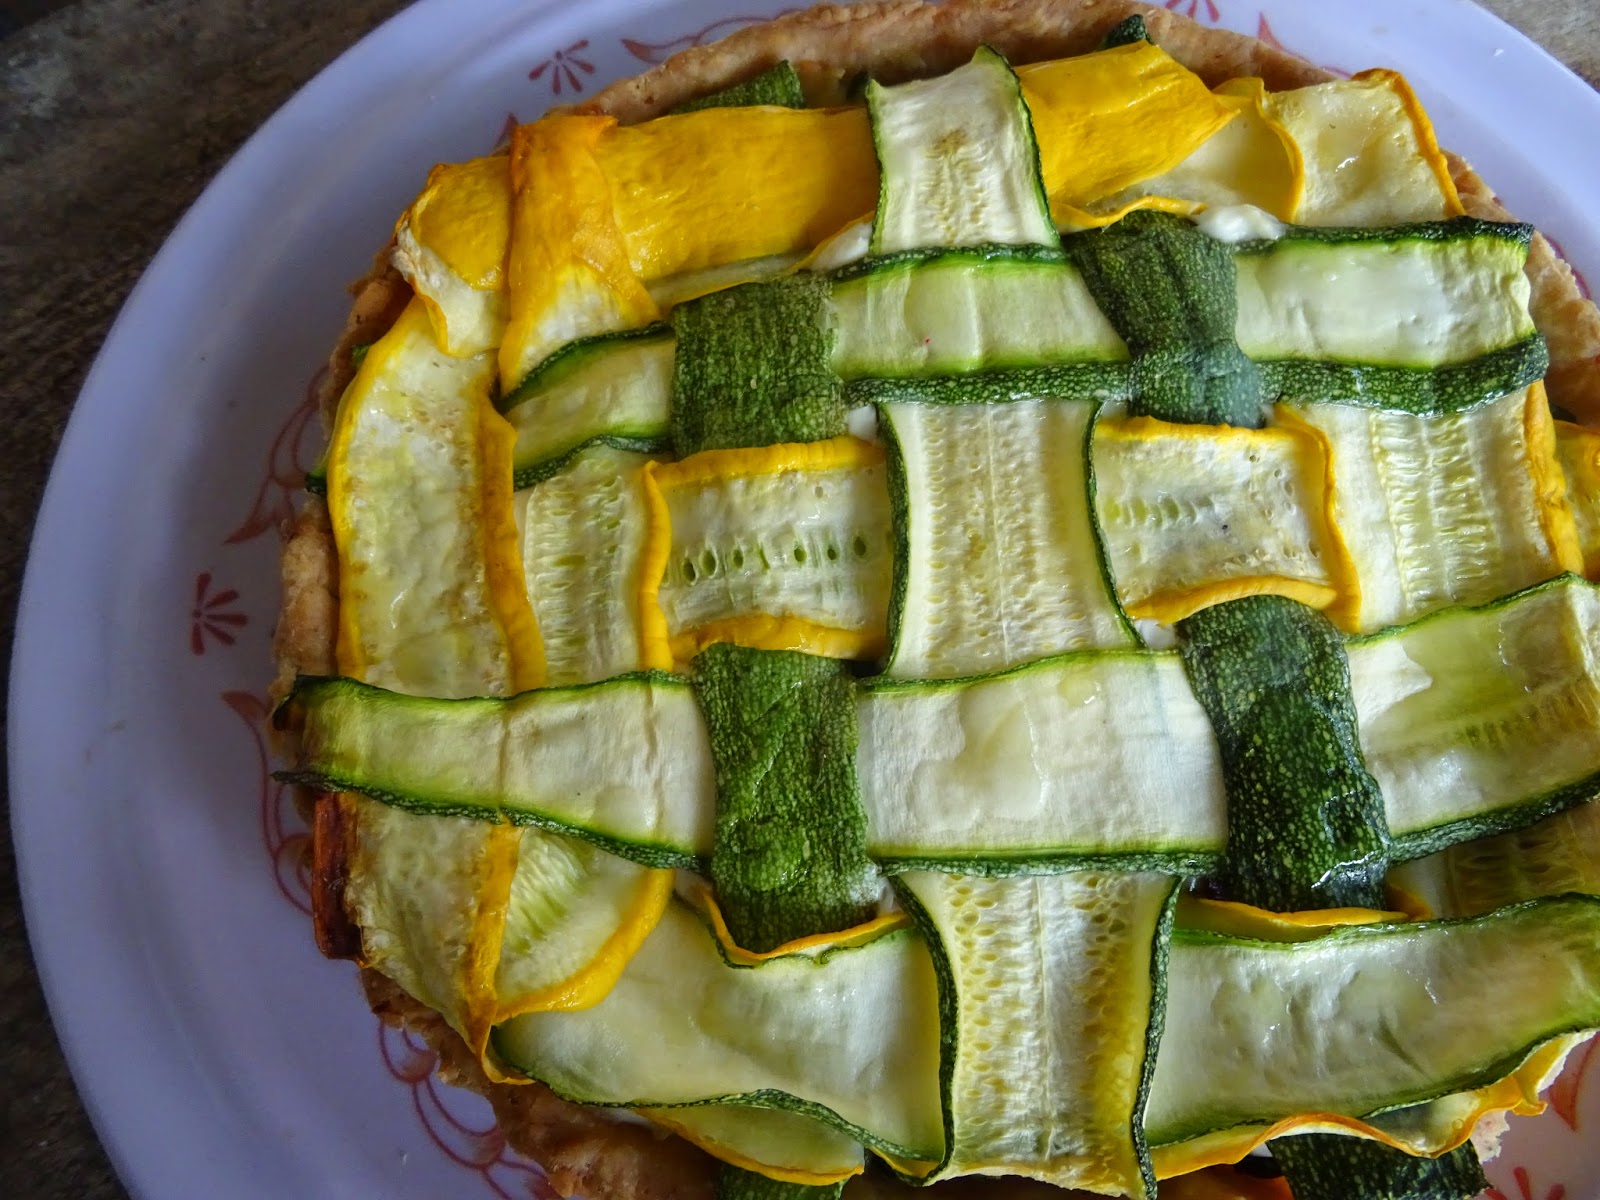 Onion & goat's cheese tart with zucchini lattice